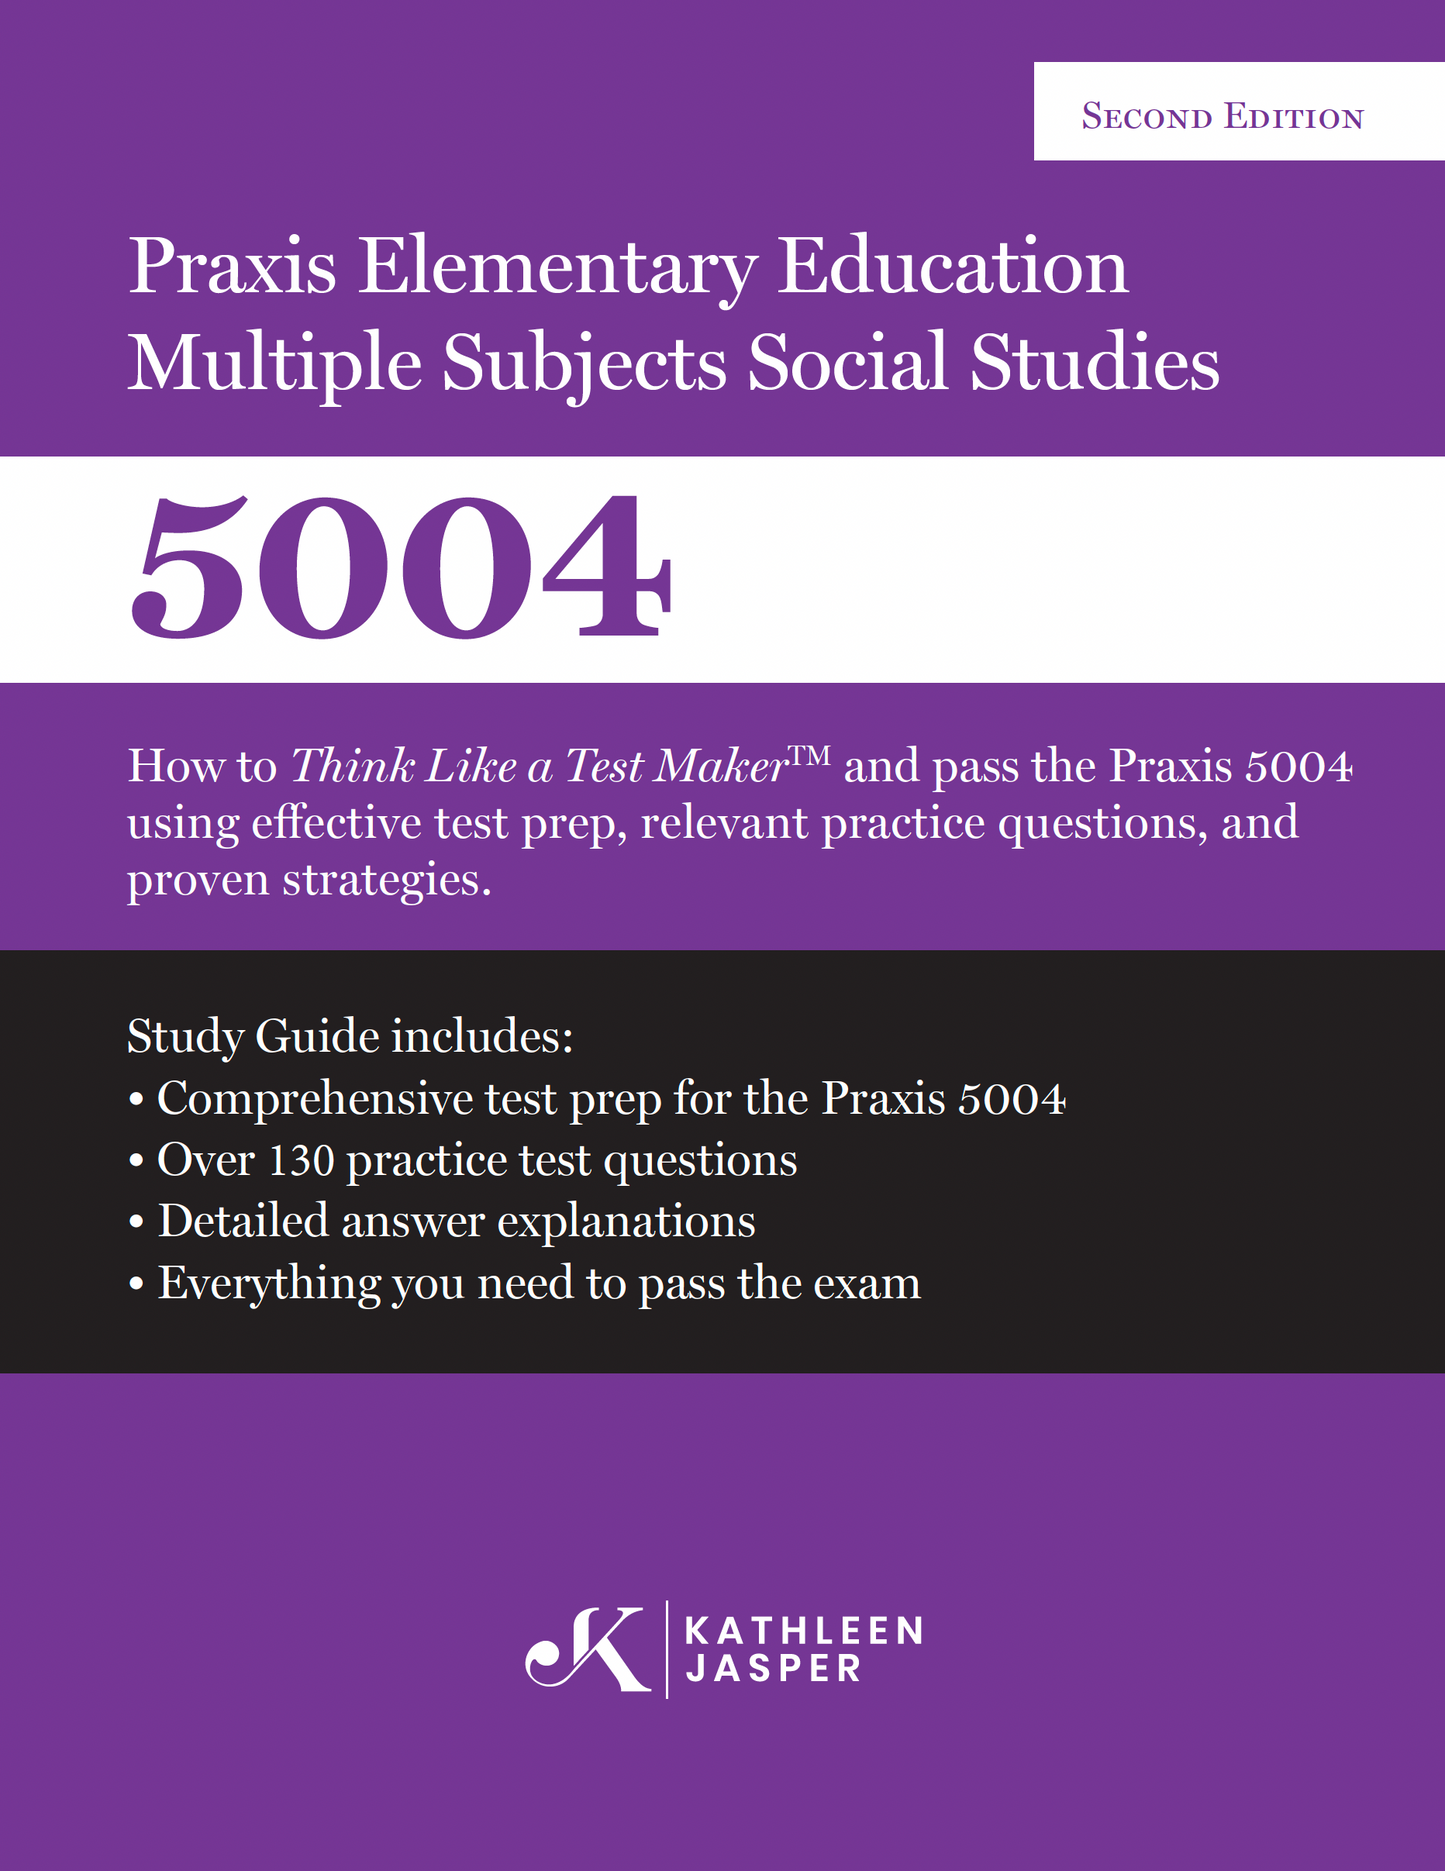 Praxis II Elementary Education: 5004 Social Studies Digital Study Guide (Second Edition)